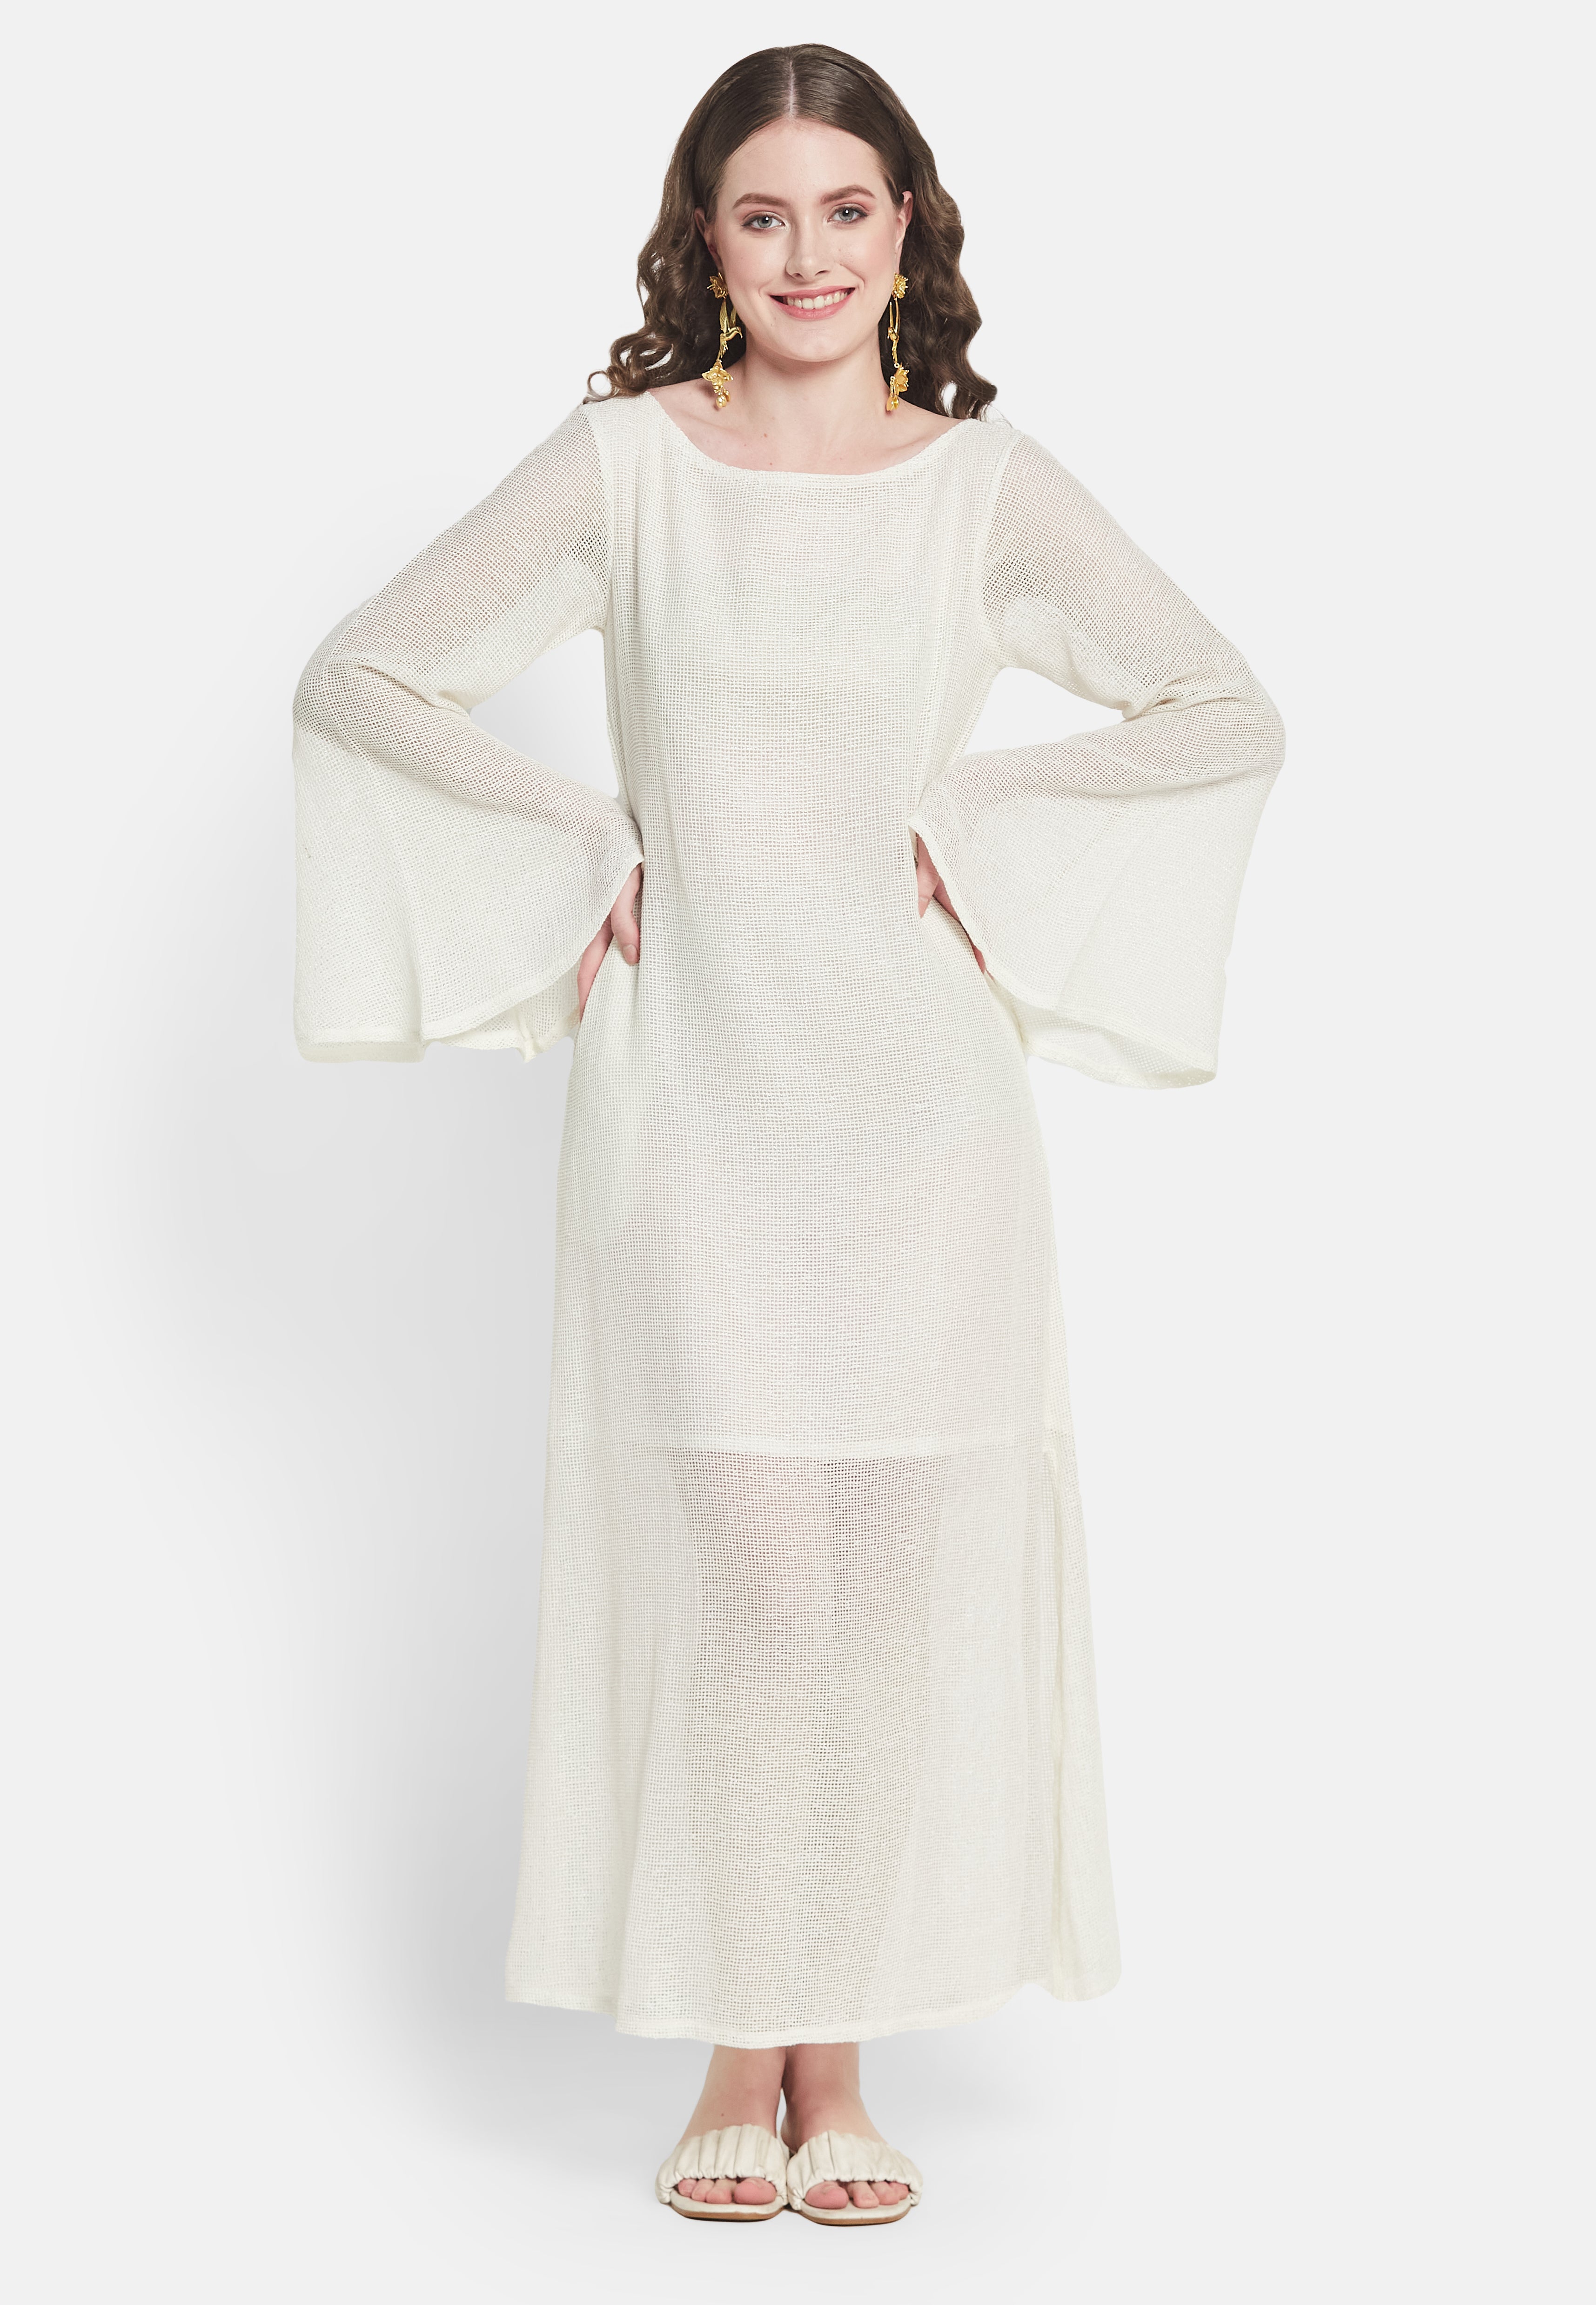 Cassia White Dress